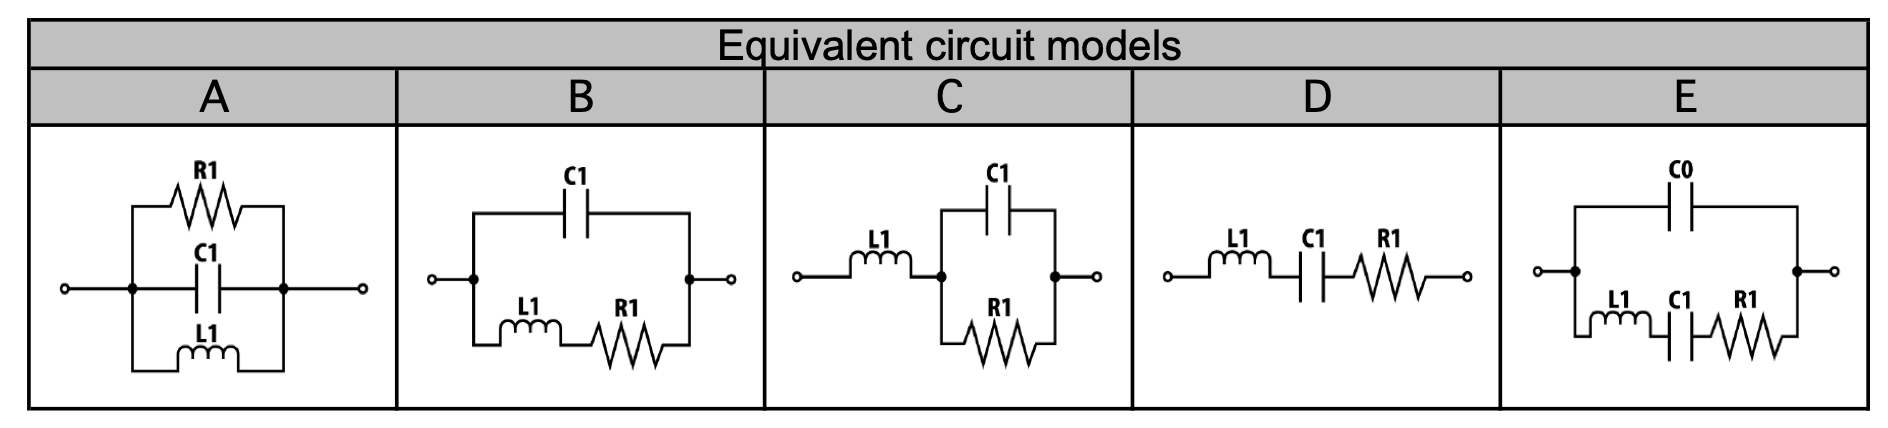 Equivalence-Circuit-Models